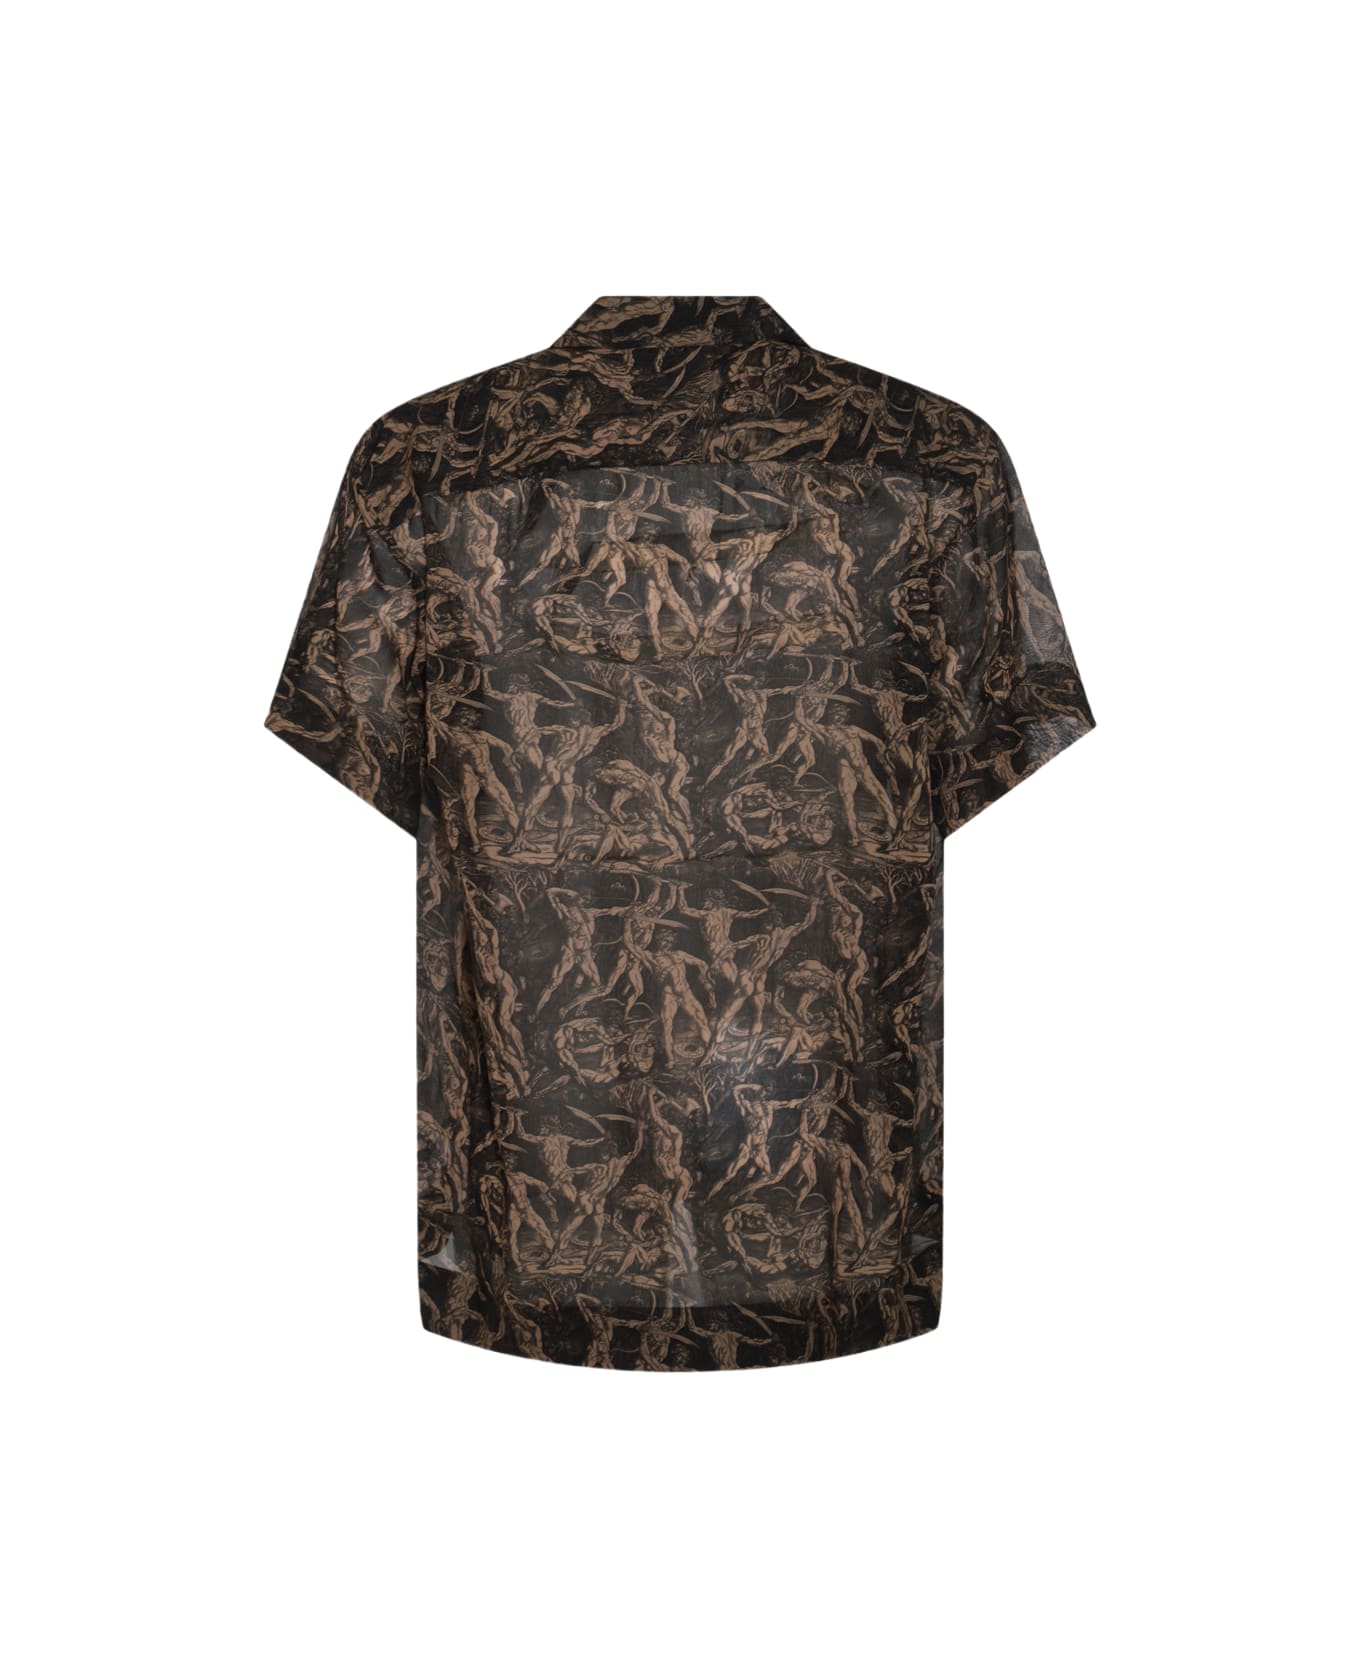 Vivienne Westwood Black And Brown Viscose Shirt - BATTLE OF MAN シャツ